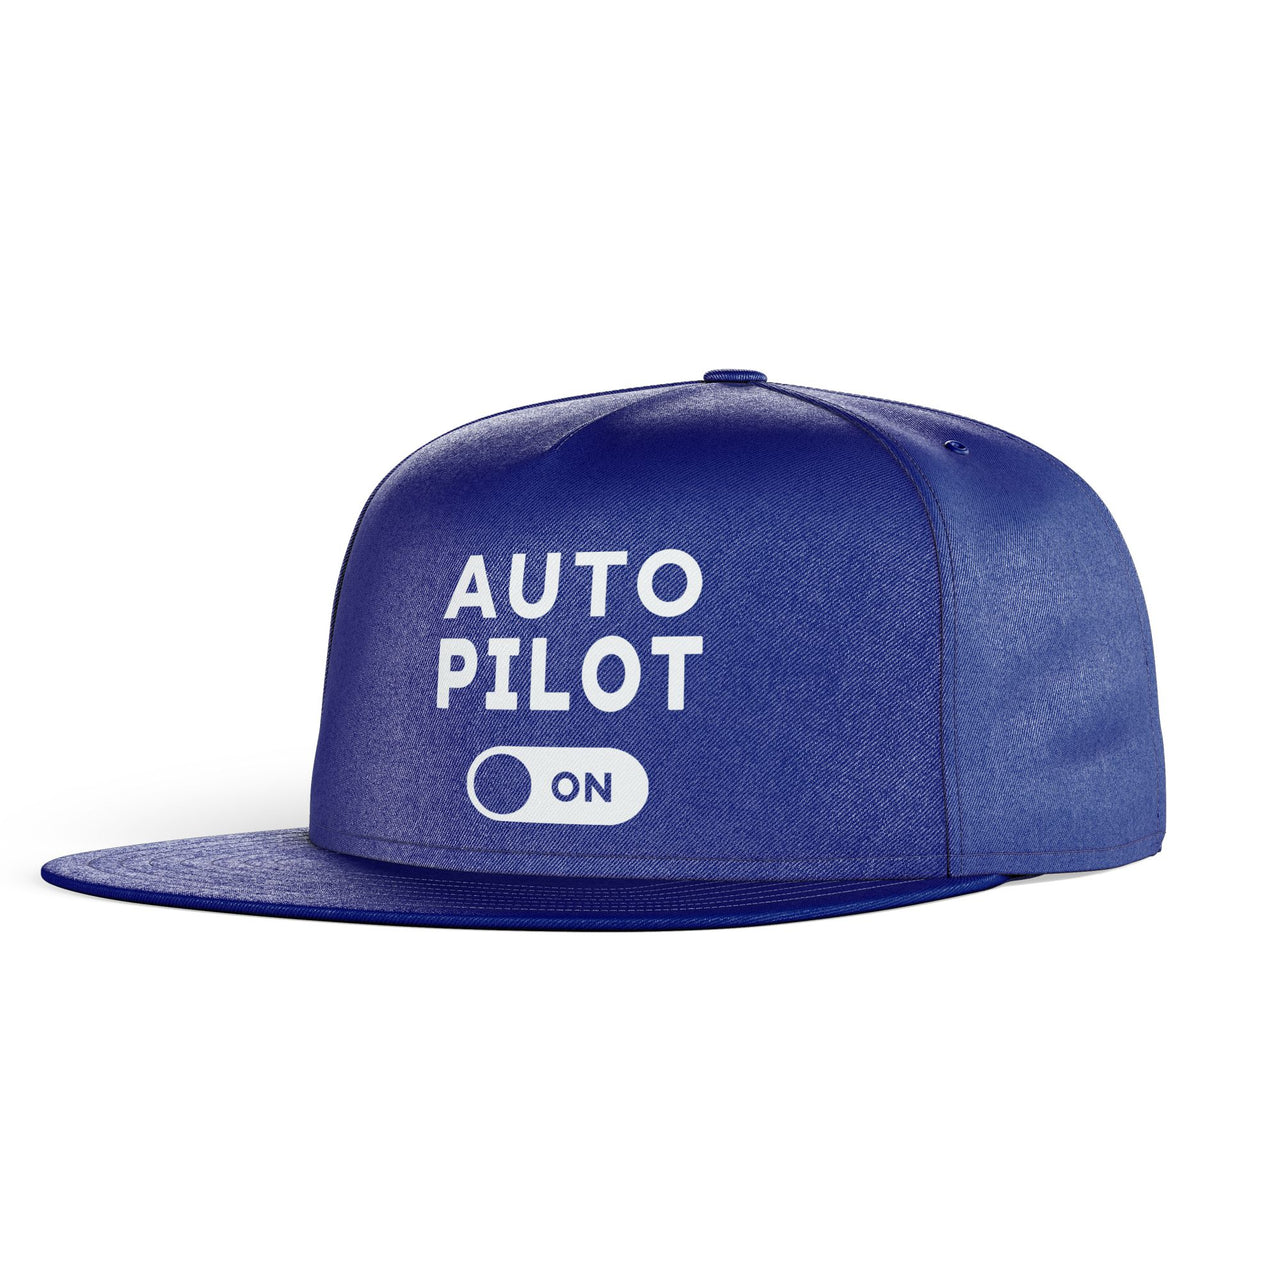 Auto Pilot ON Designed Snapback Caps & Hats